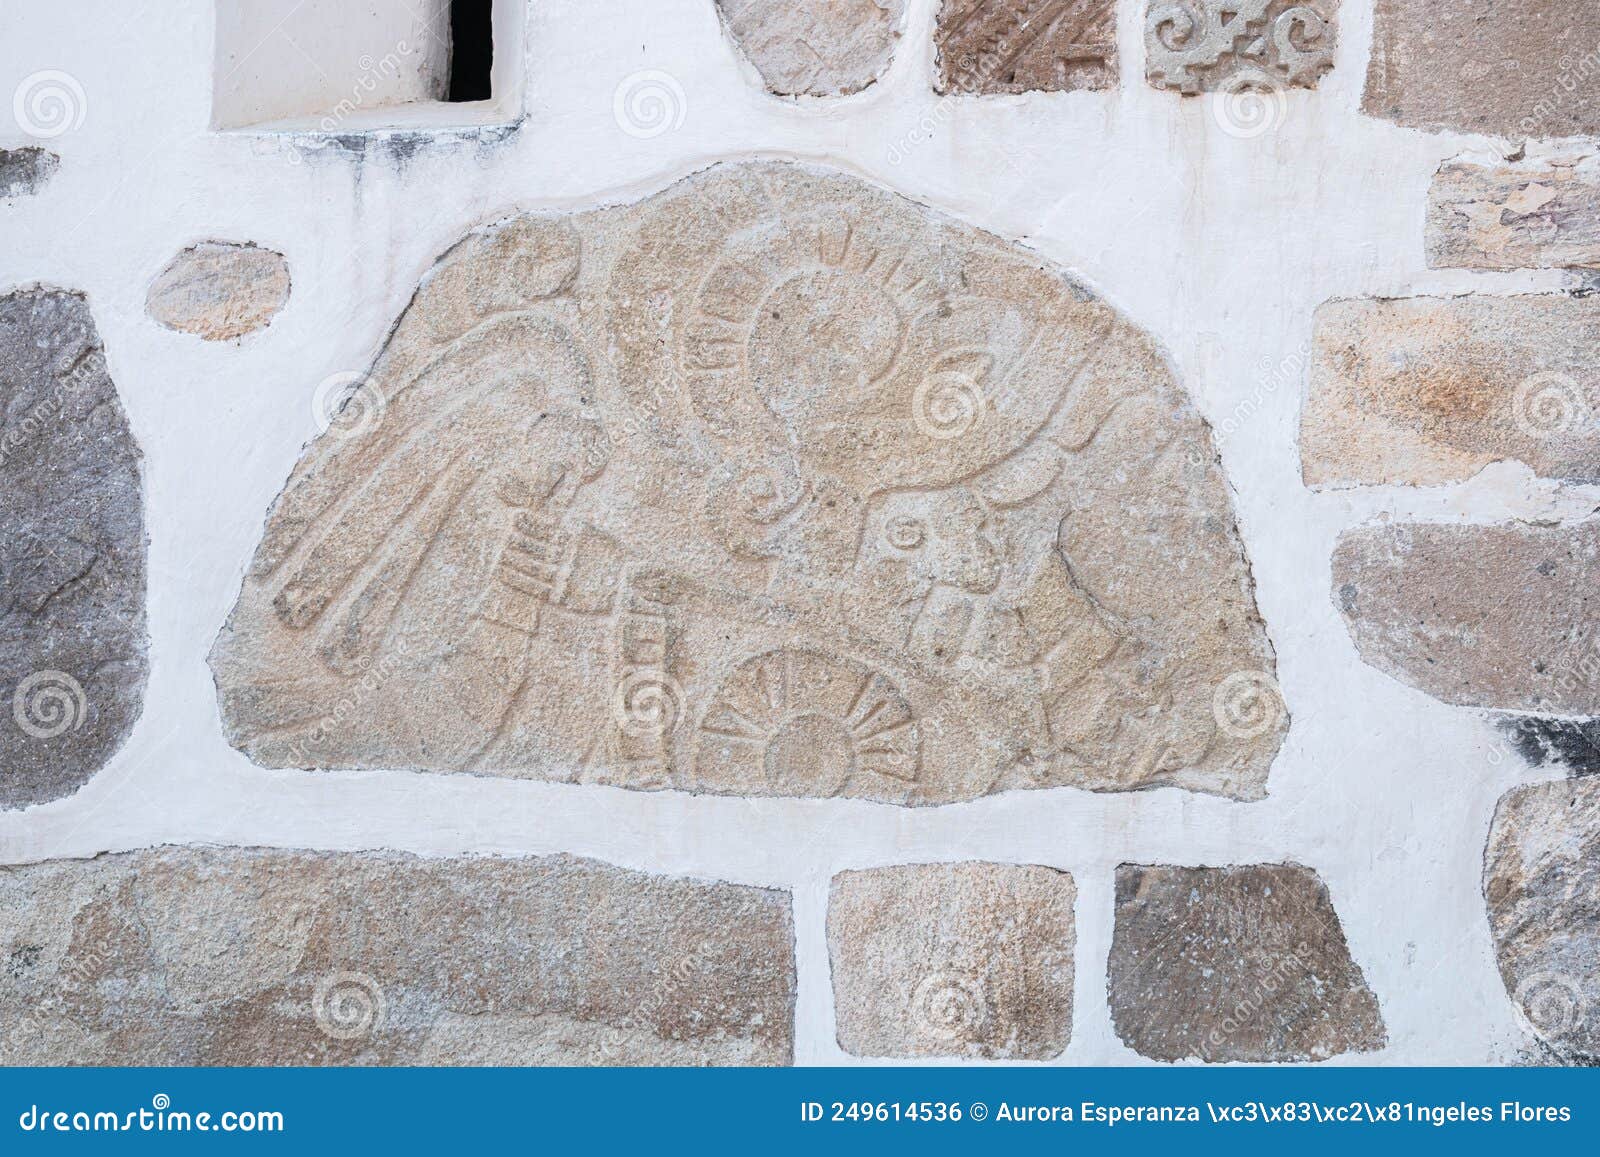 pre-columbian stone. teotitlan del valle, oaxaca, mexico